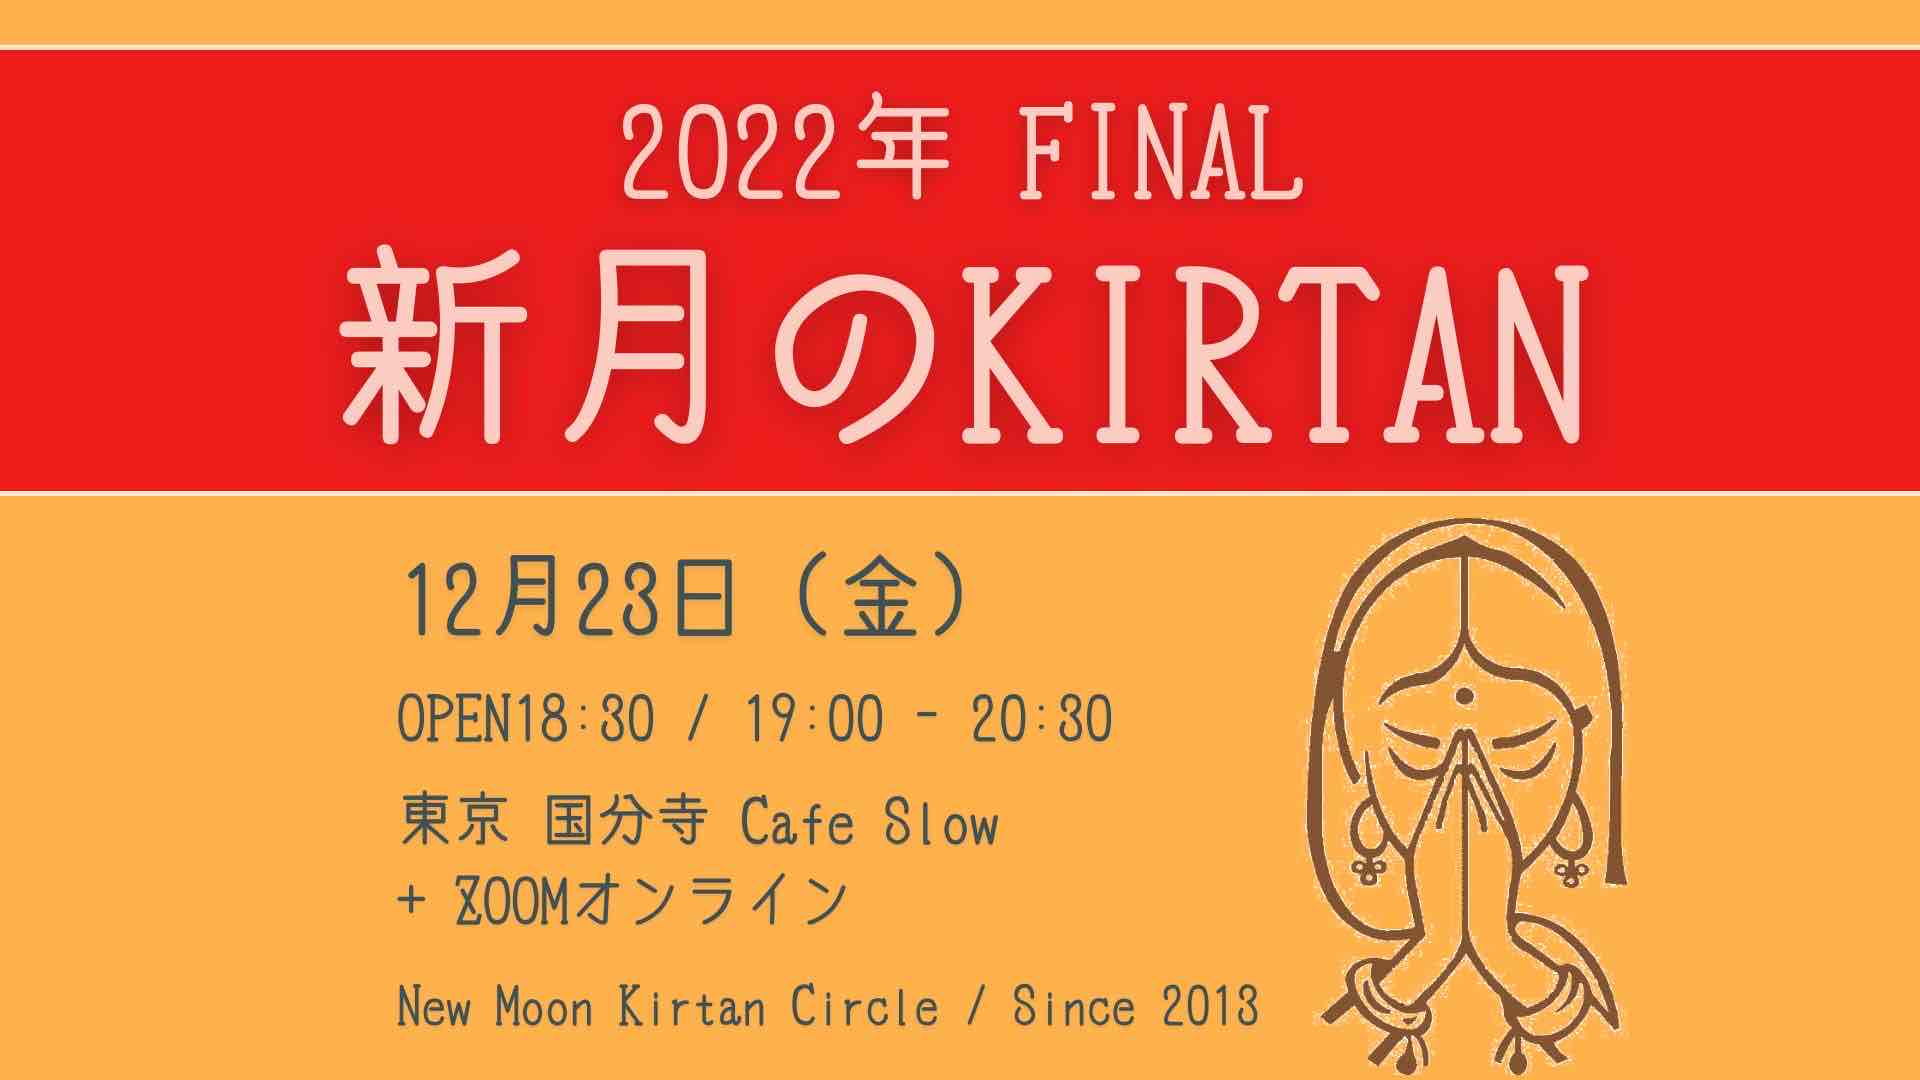 12/23(金) 新月のKIRTAN 2022 Final